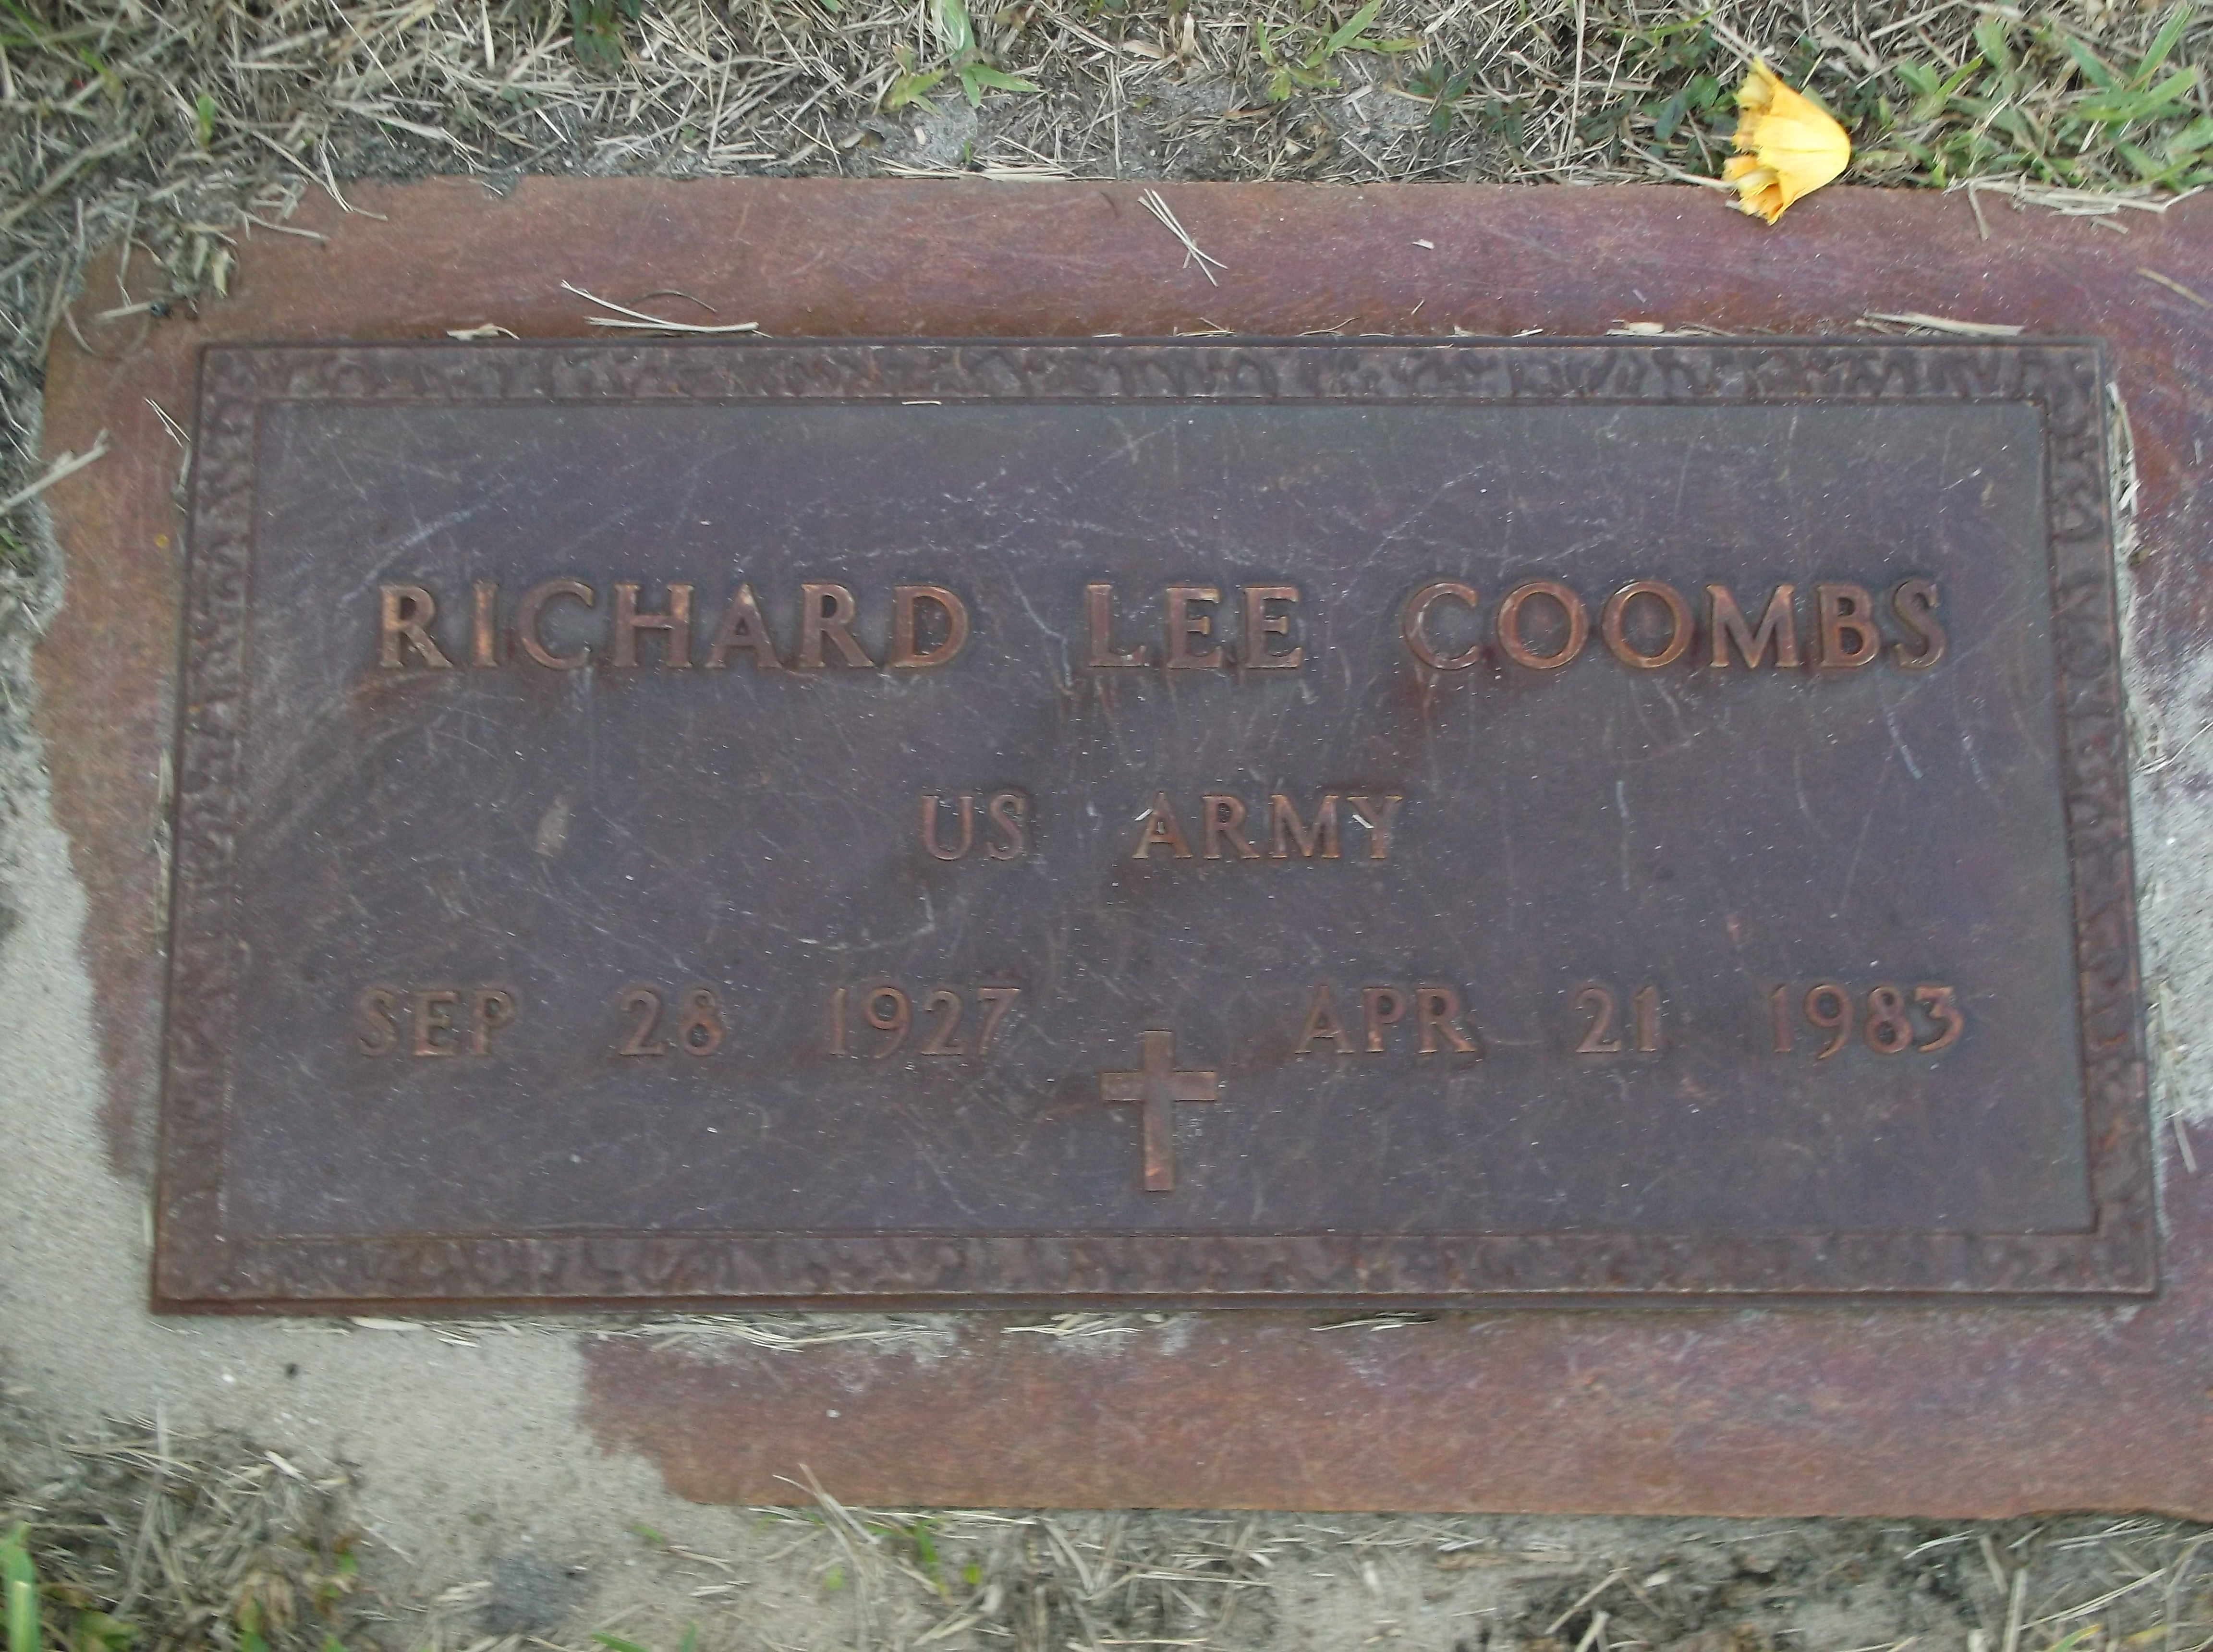 Richard Lee Coombs